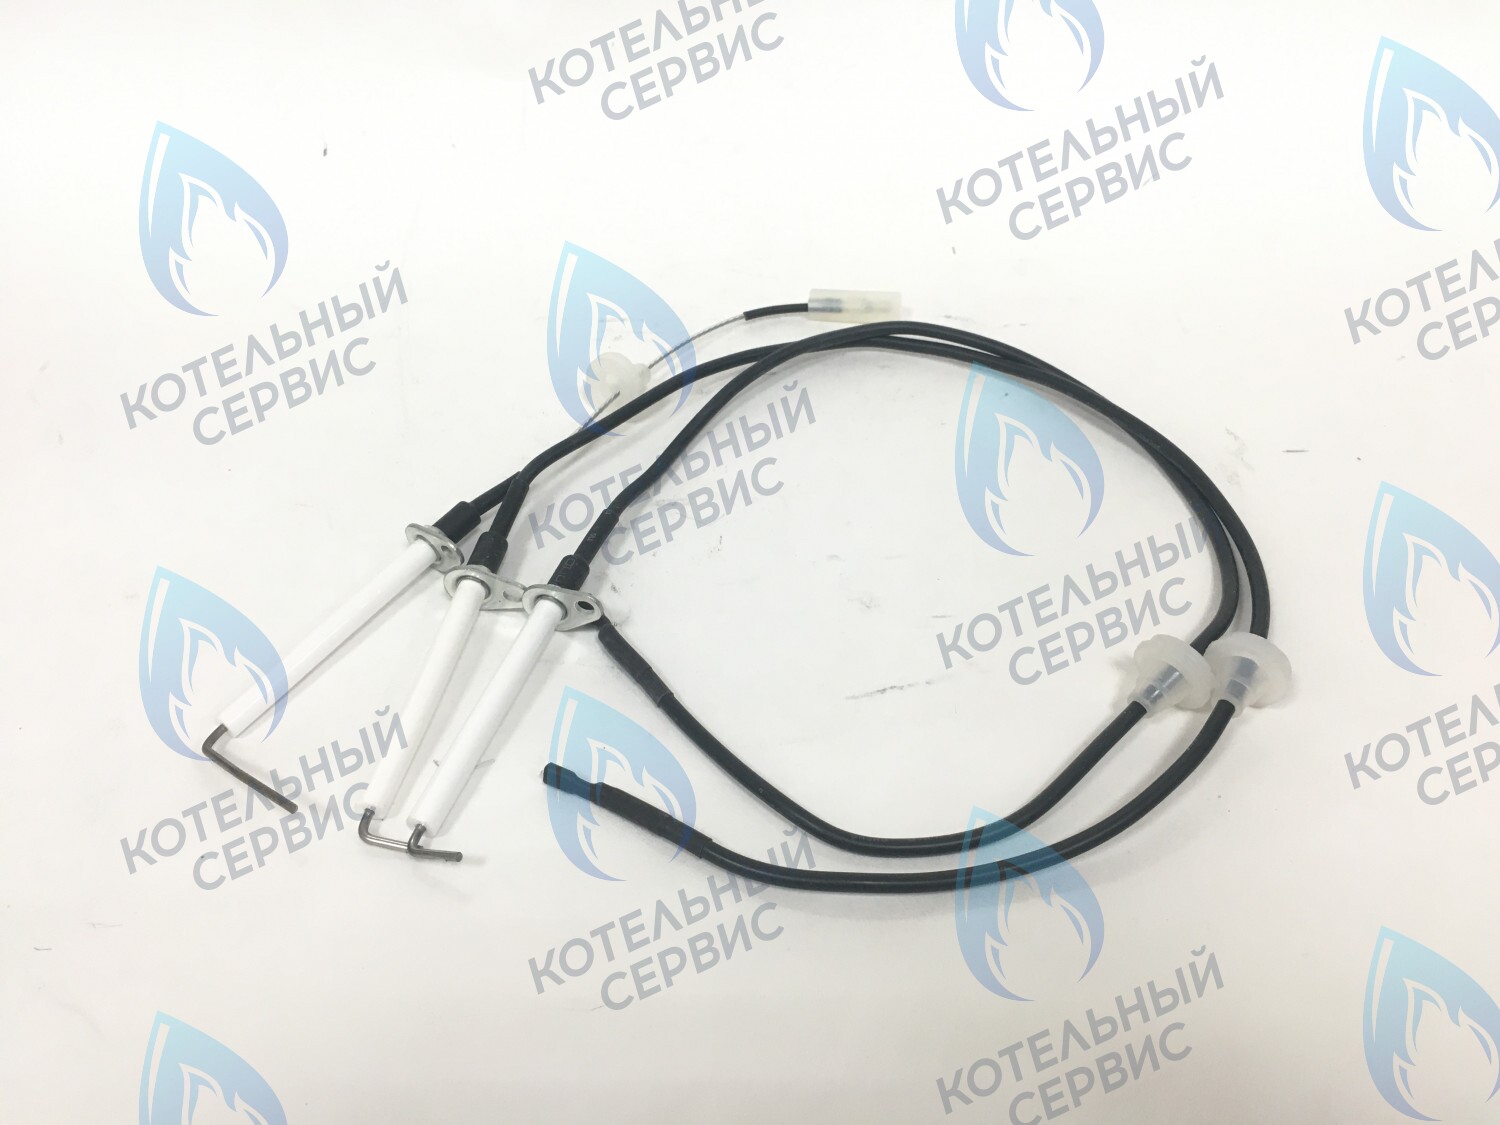 IE025-Комп Комплект электродов с кабелями для котлов GAZECO 18 С1/С2/Т1/Т2, 24 С1/С2/Т1/Т2 произв. после 2012 г. 05-4023 в Барнауле